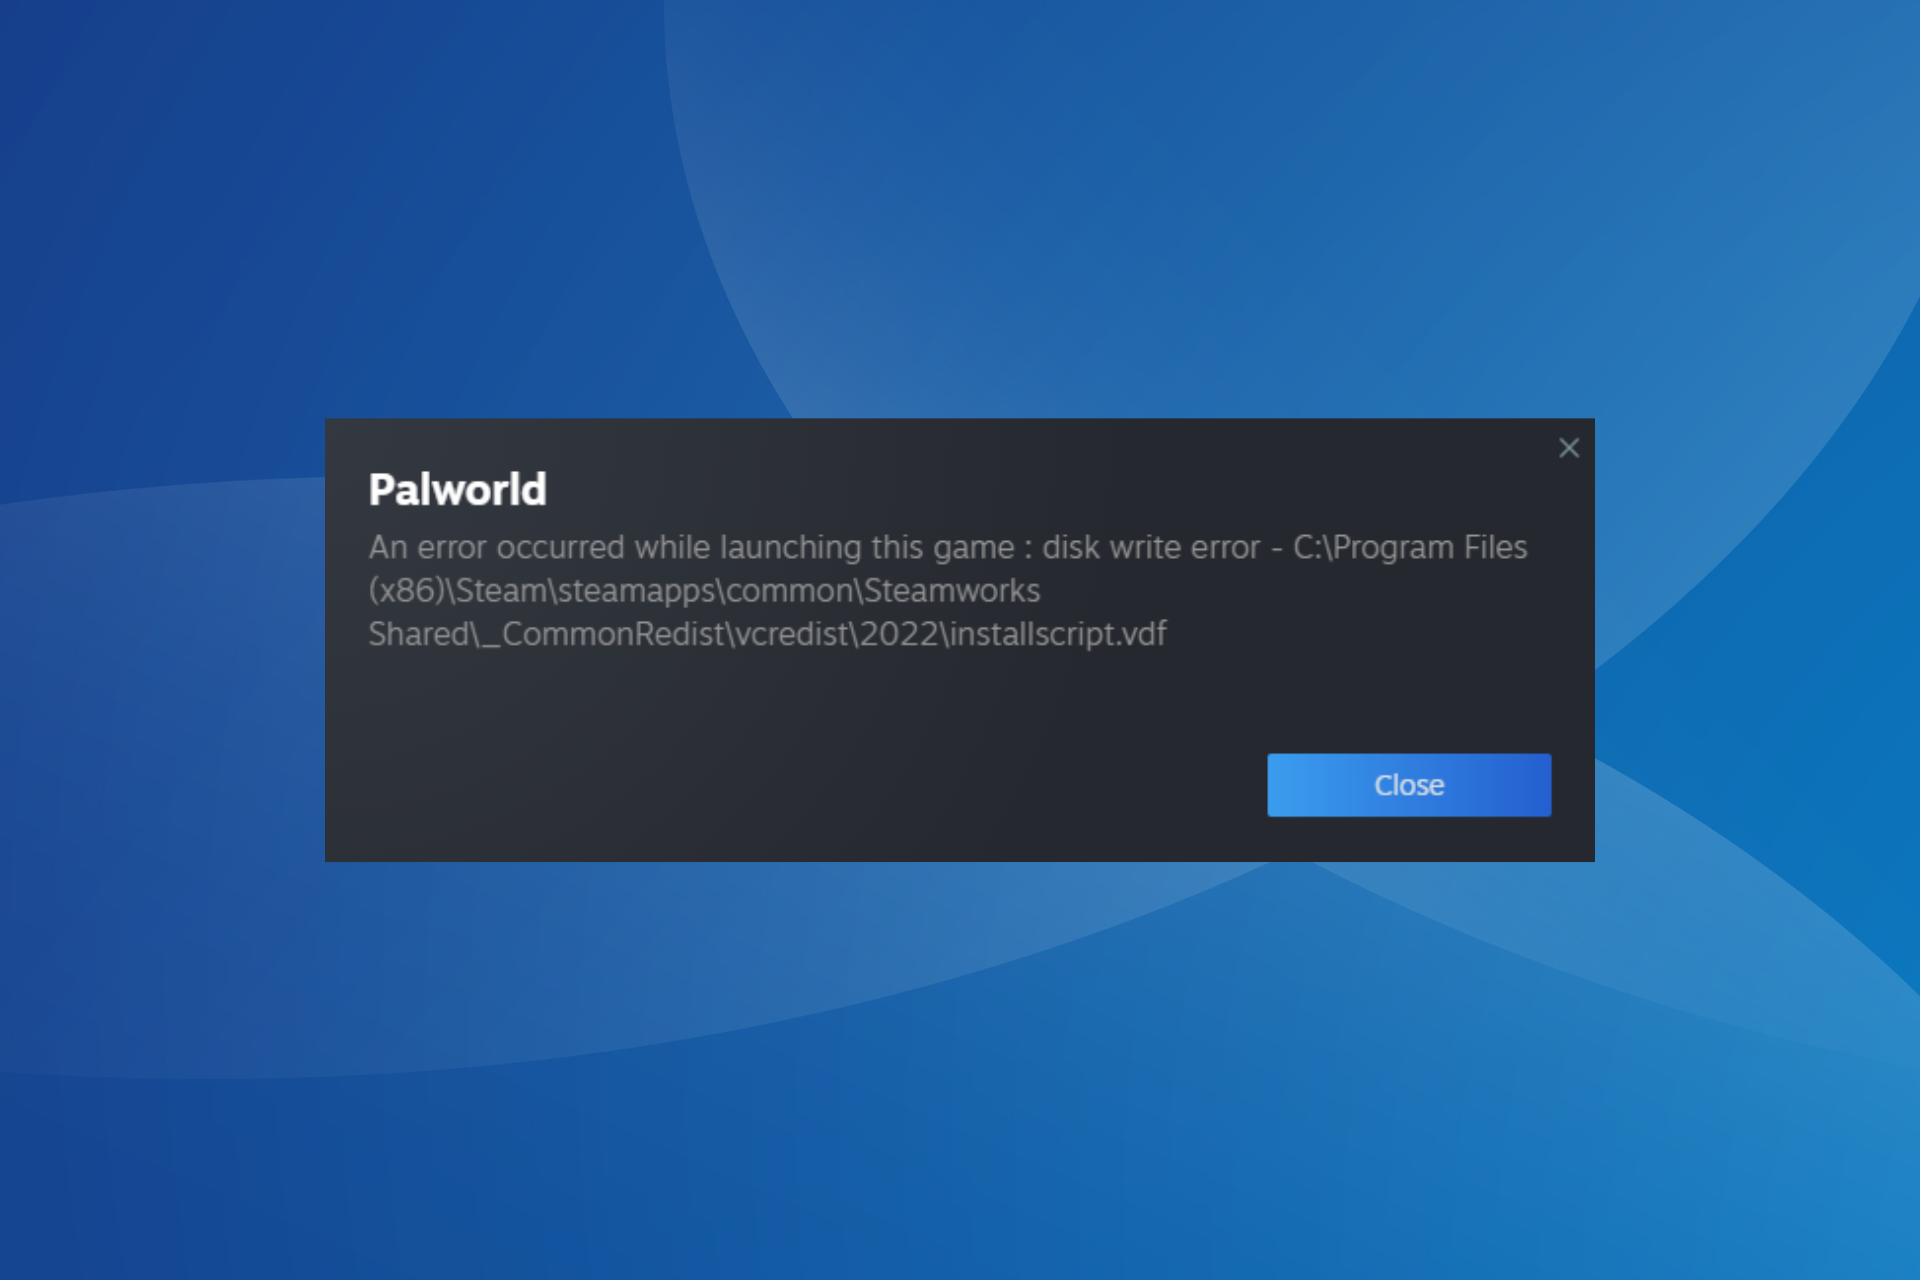 fix palworld disk write error